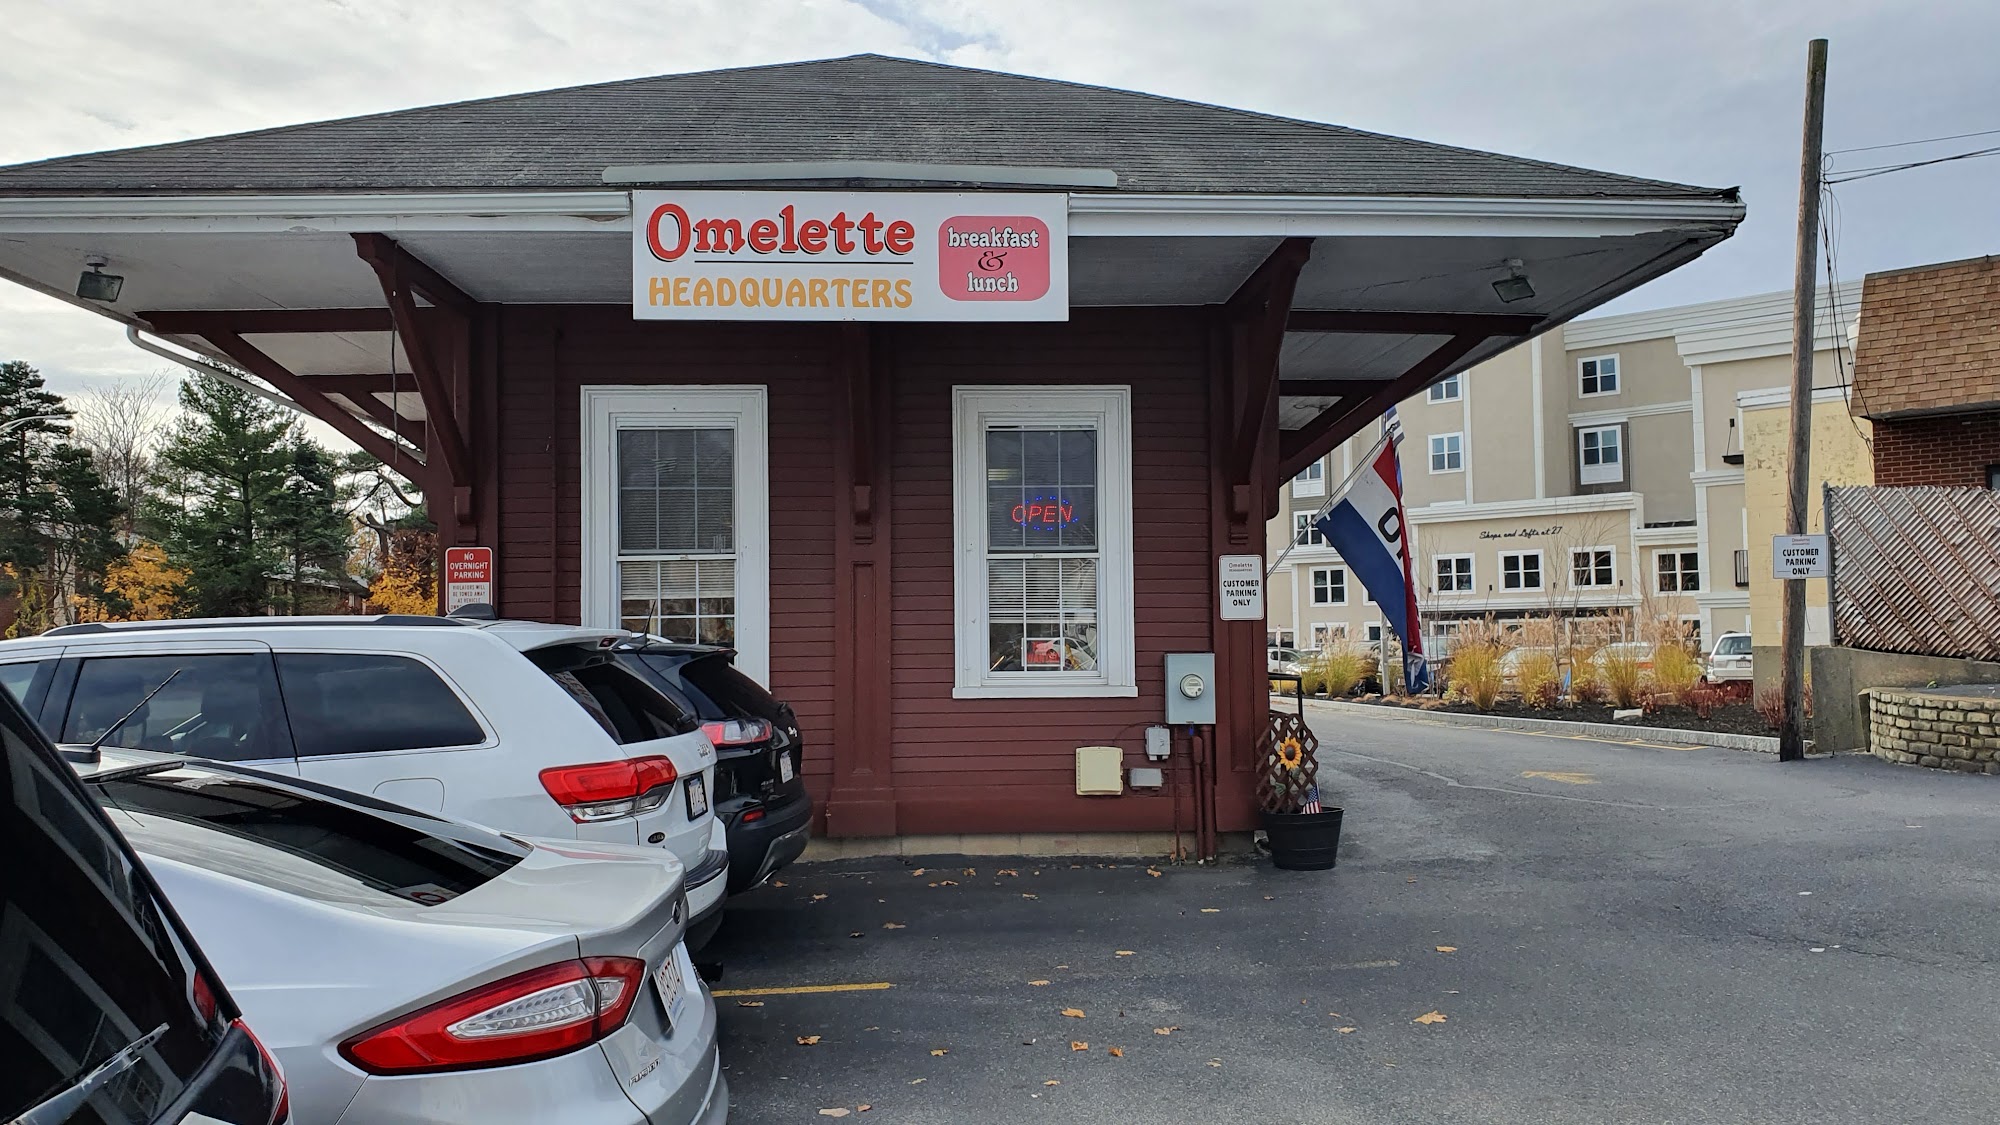 Omelette Headquarters